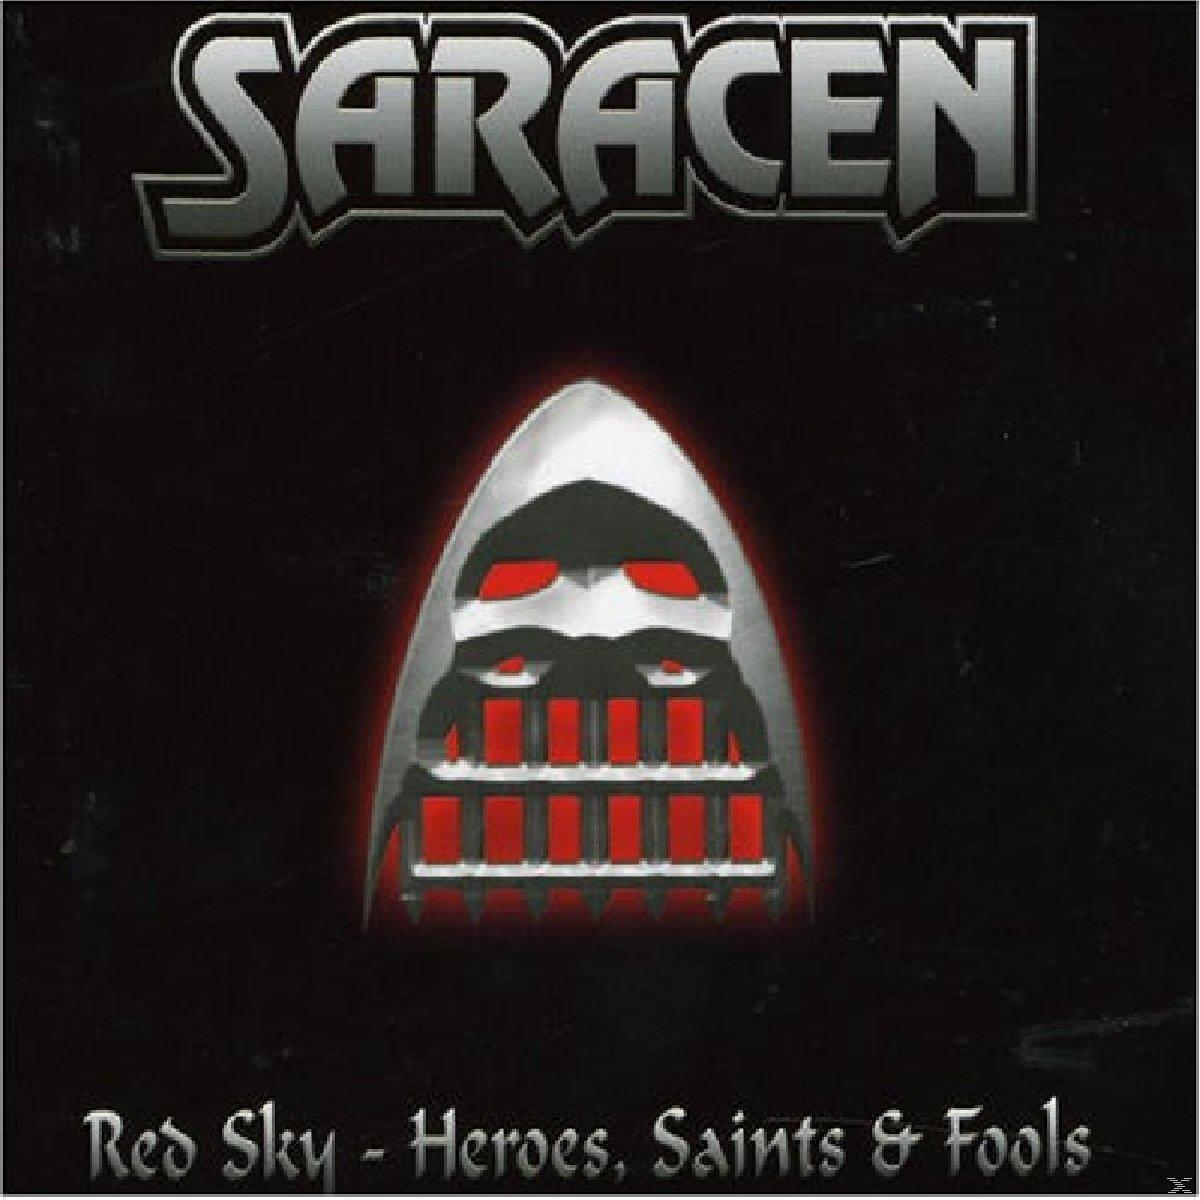 Saracen - (CD) Heroes Fools - Red & Saints Sky